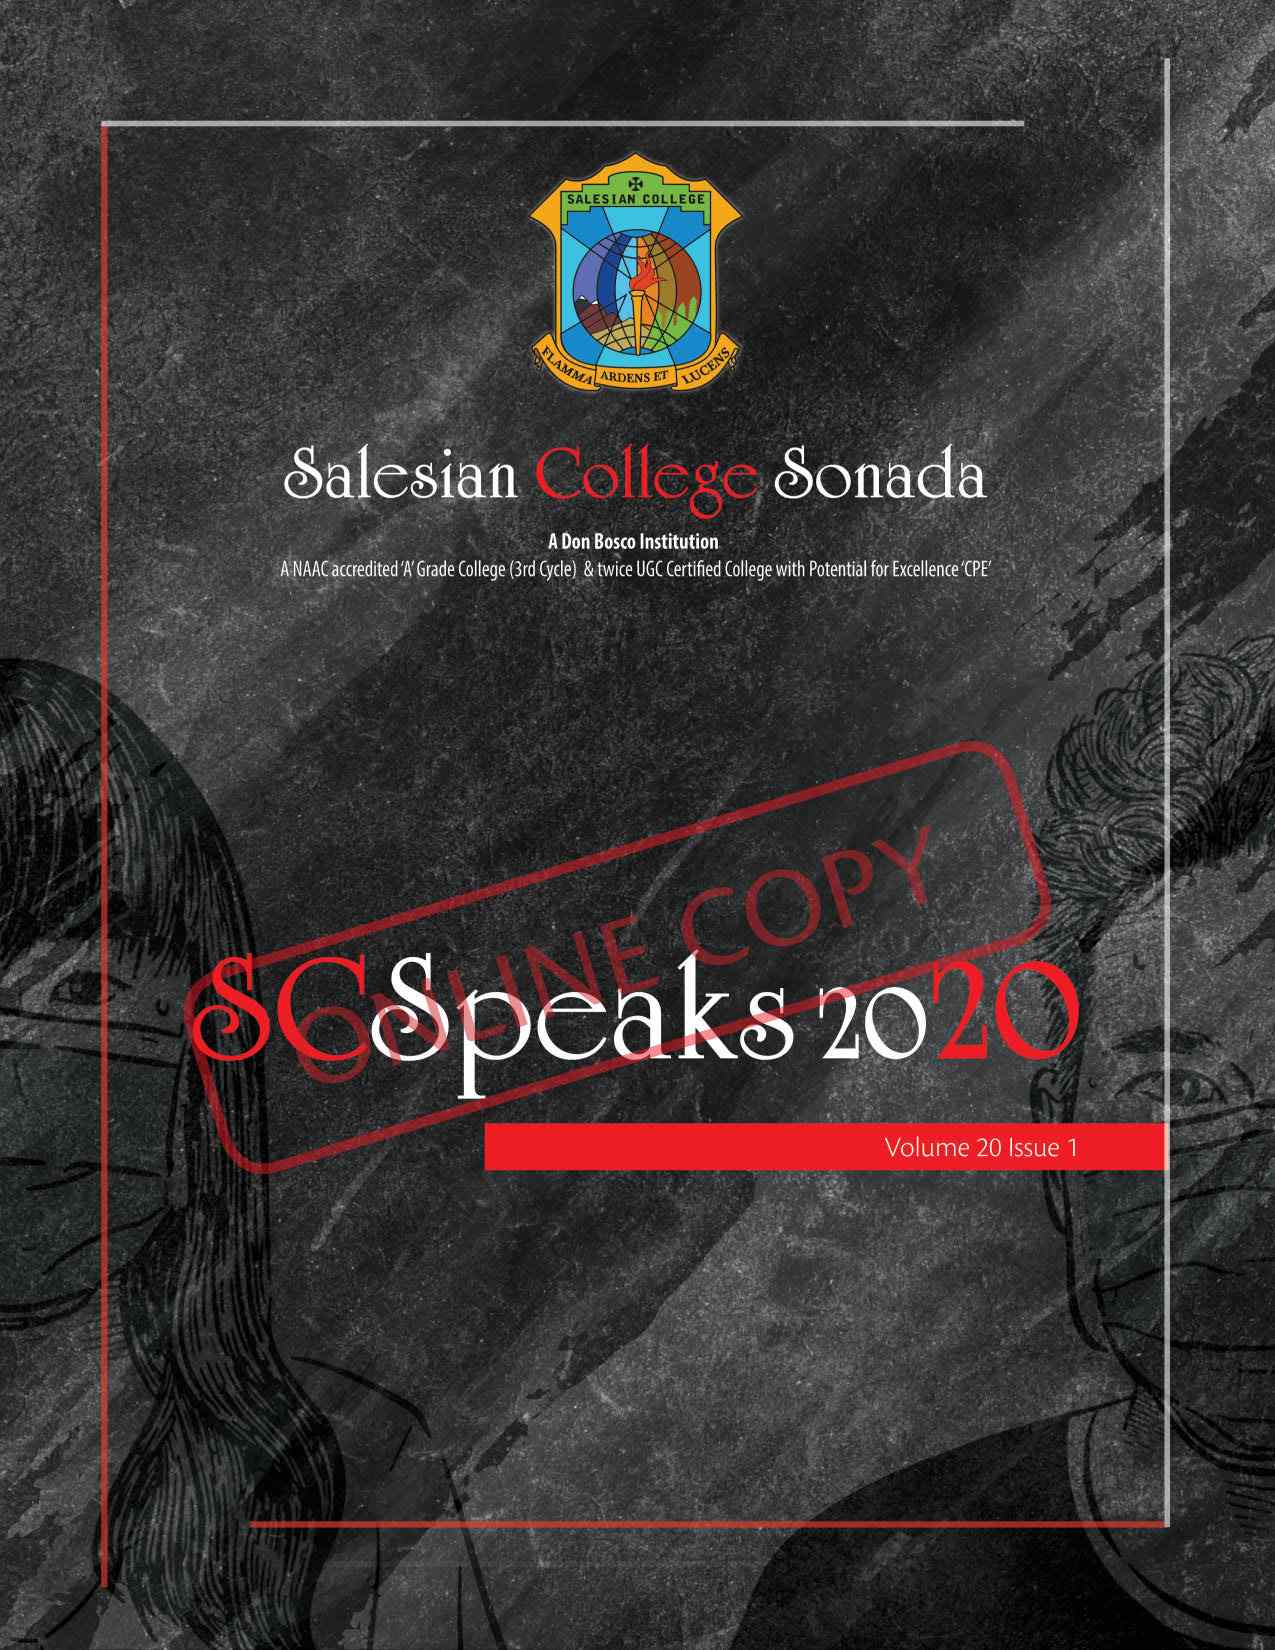 SCSpeaks 2020